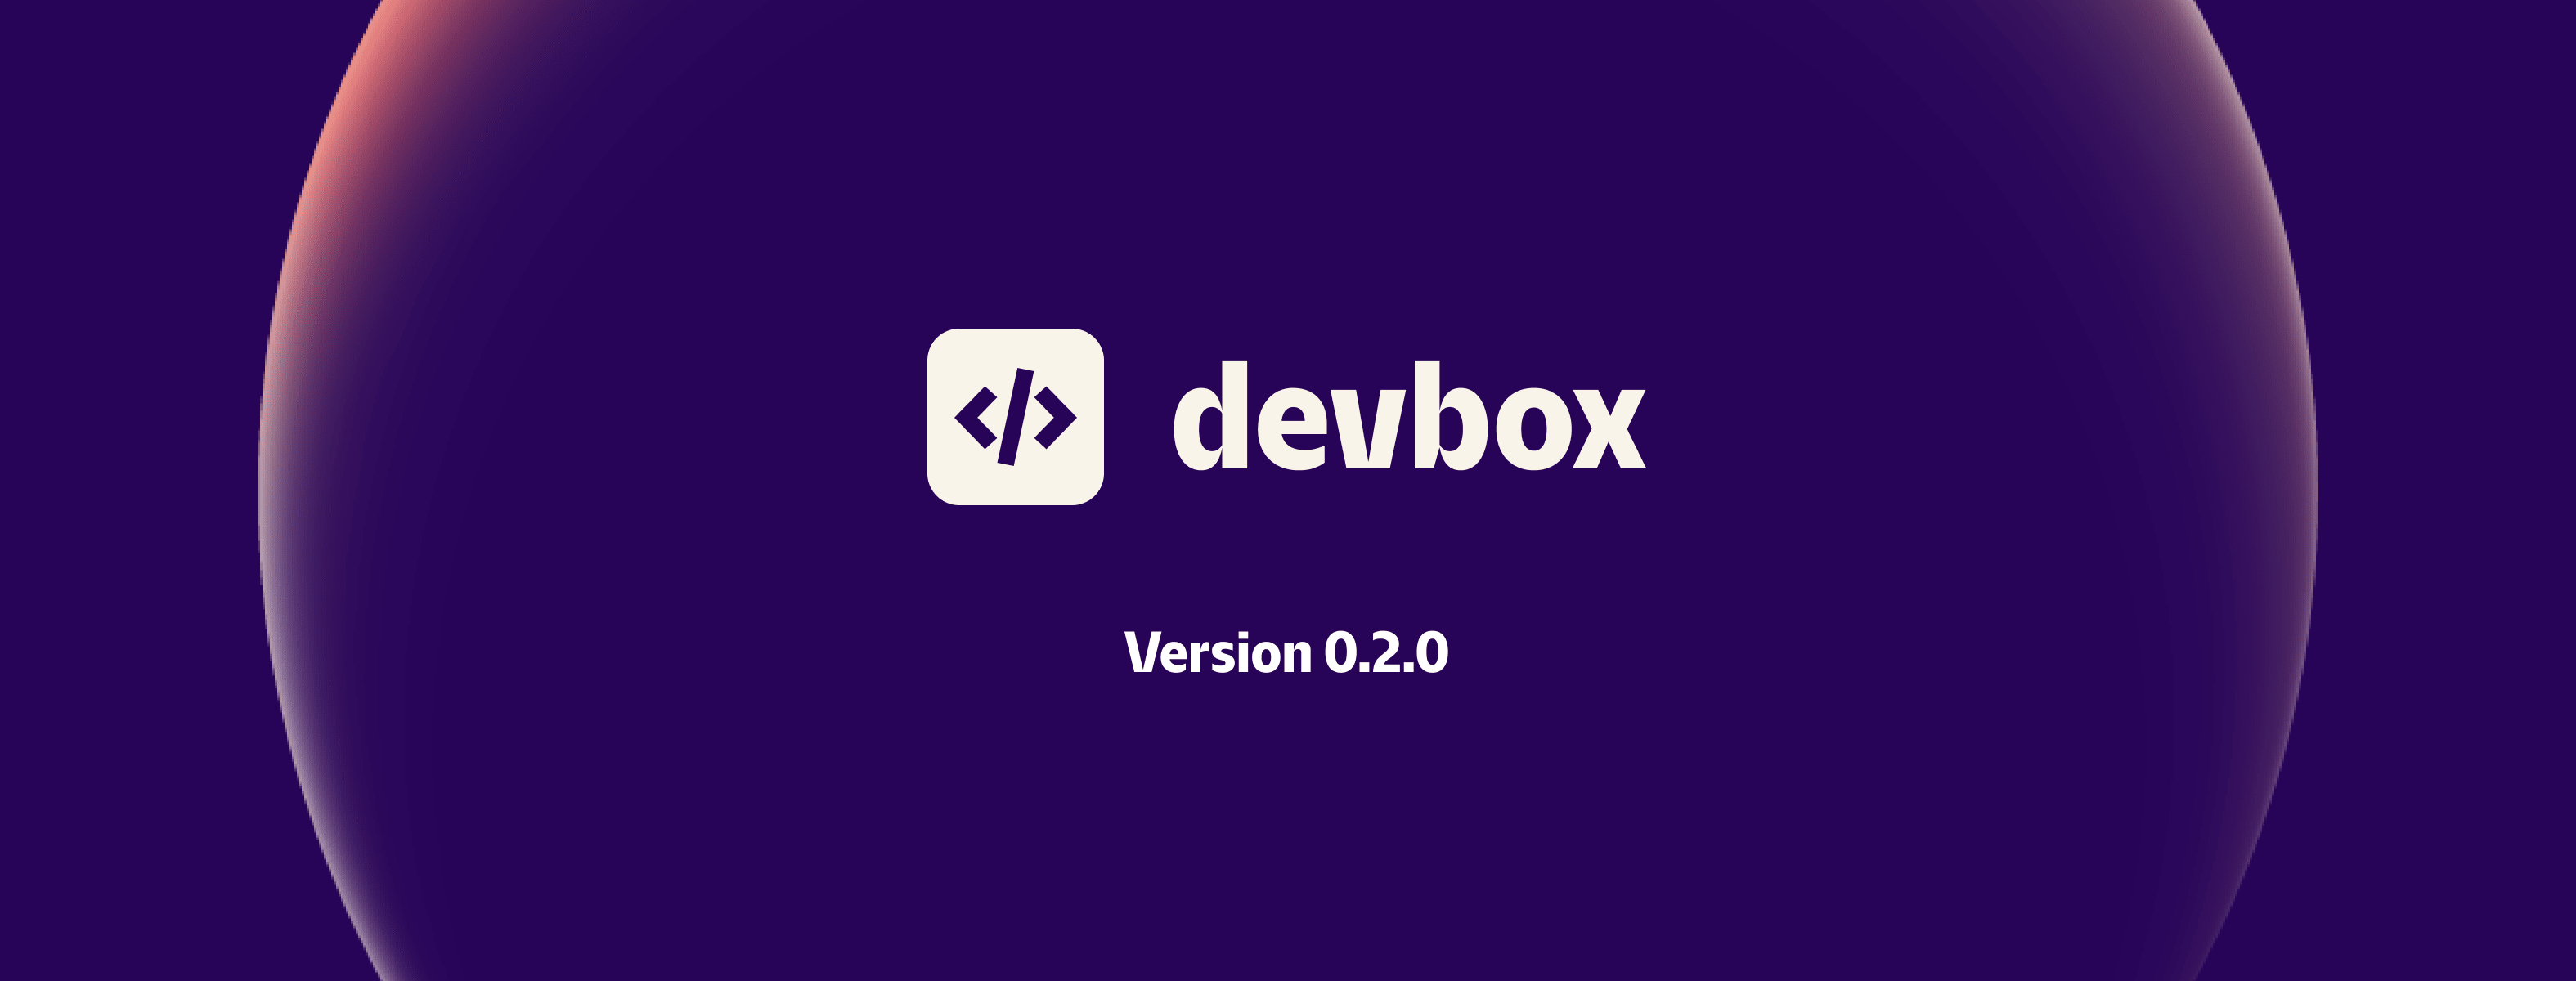 Devbox Version 0.2.0